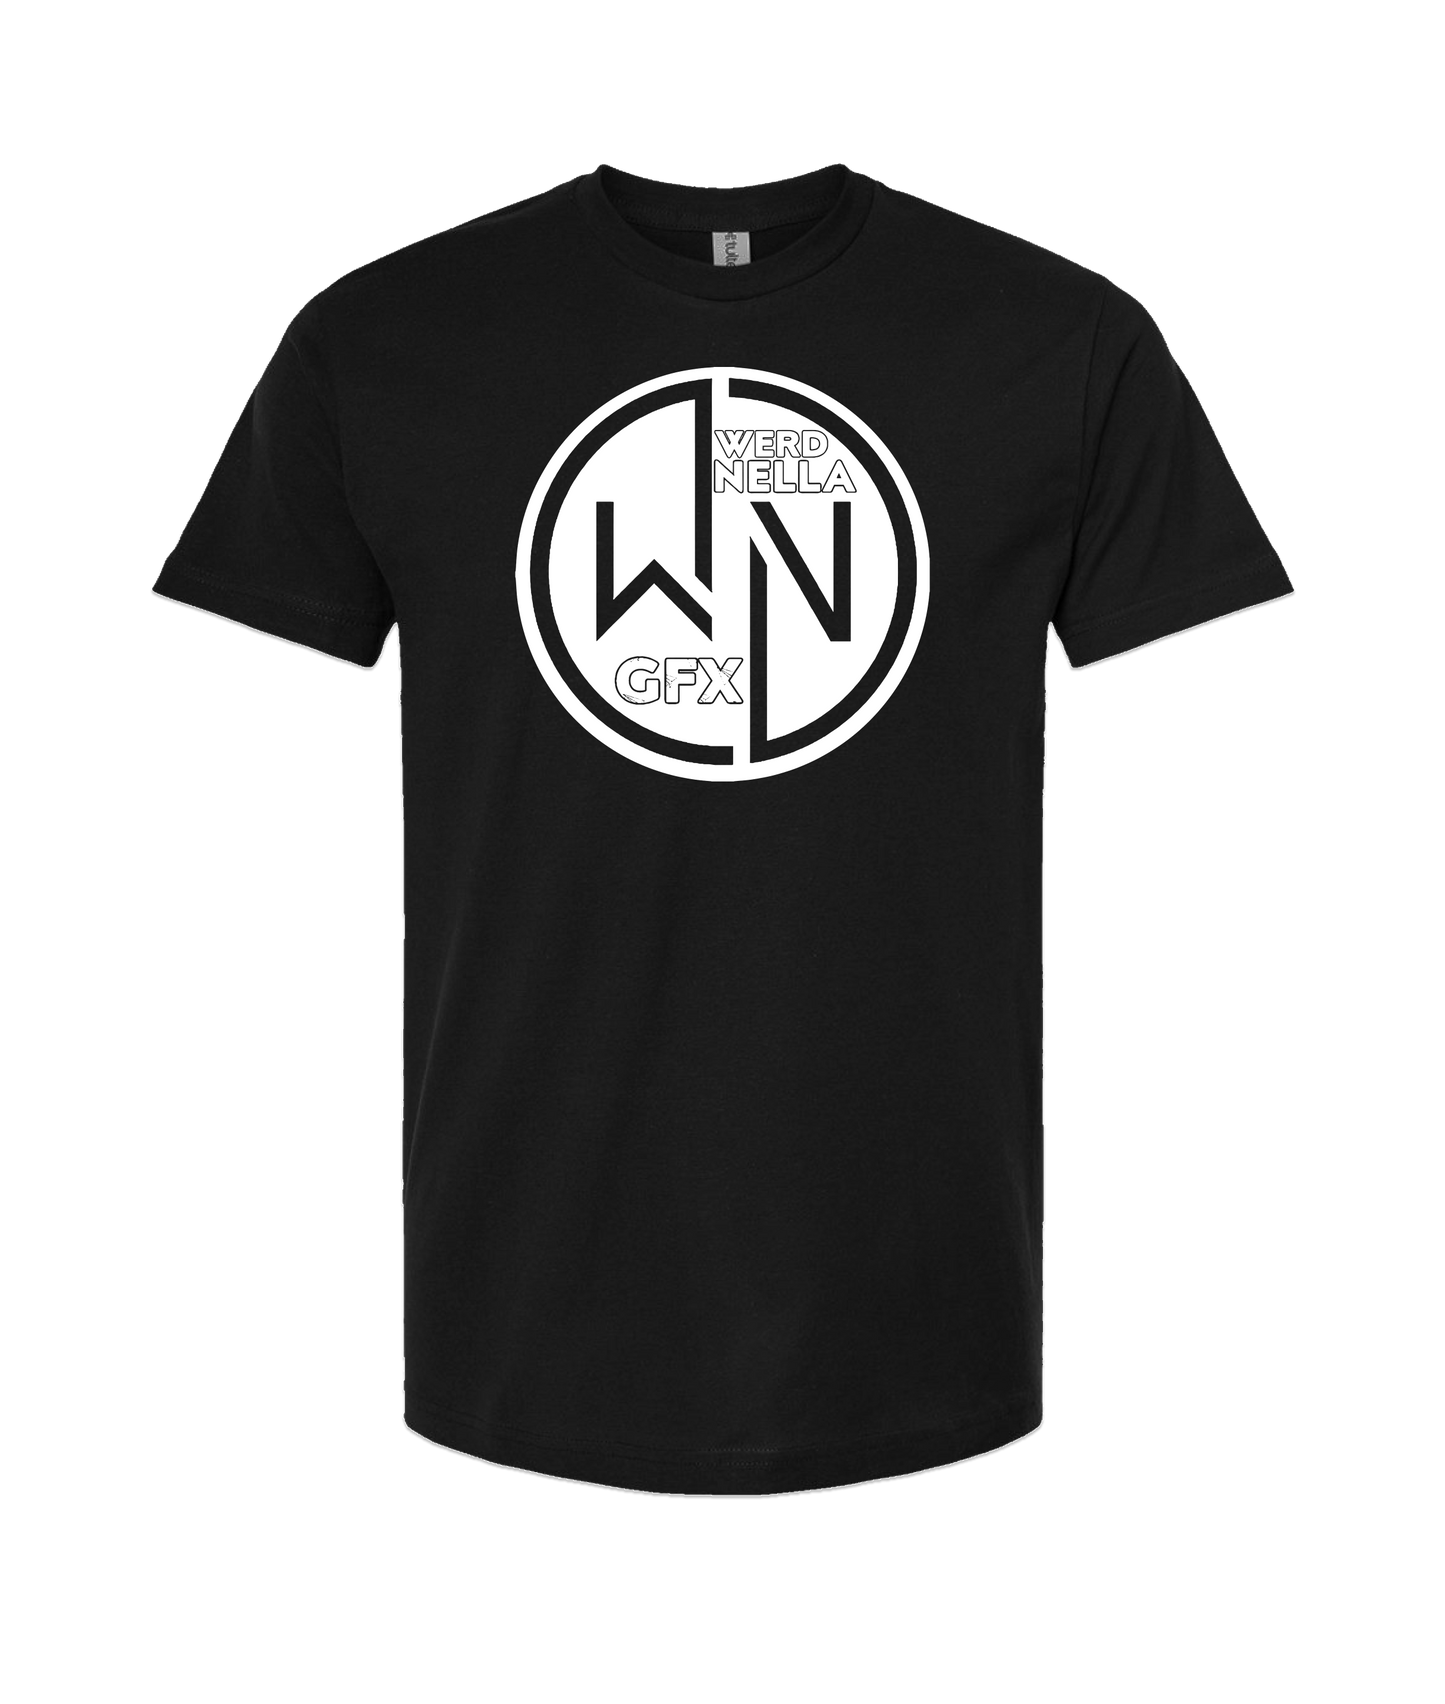 Werd Nella Graphics - WN GFX - Black T Shirt